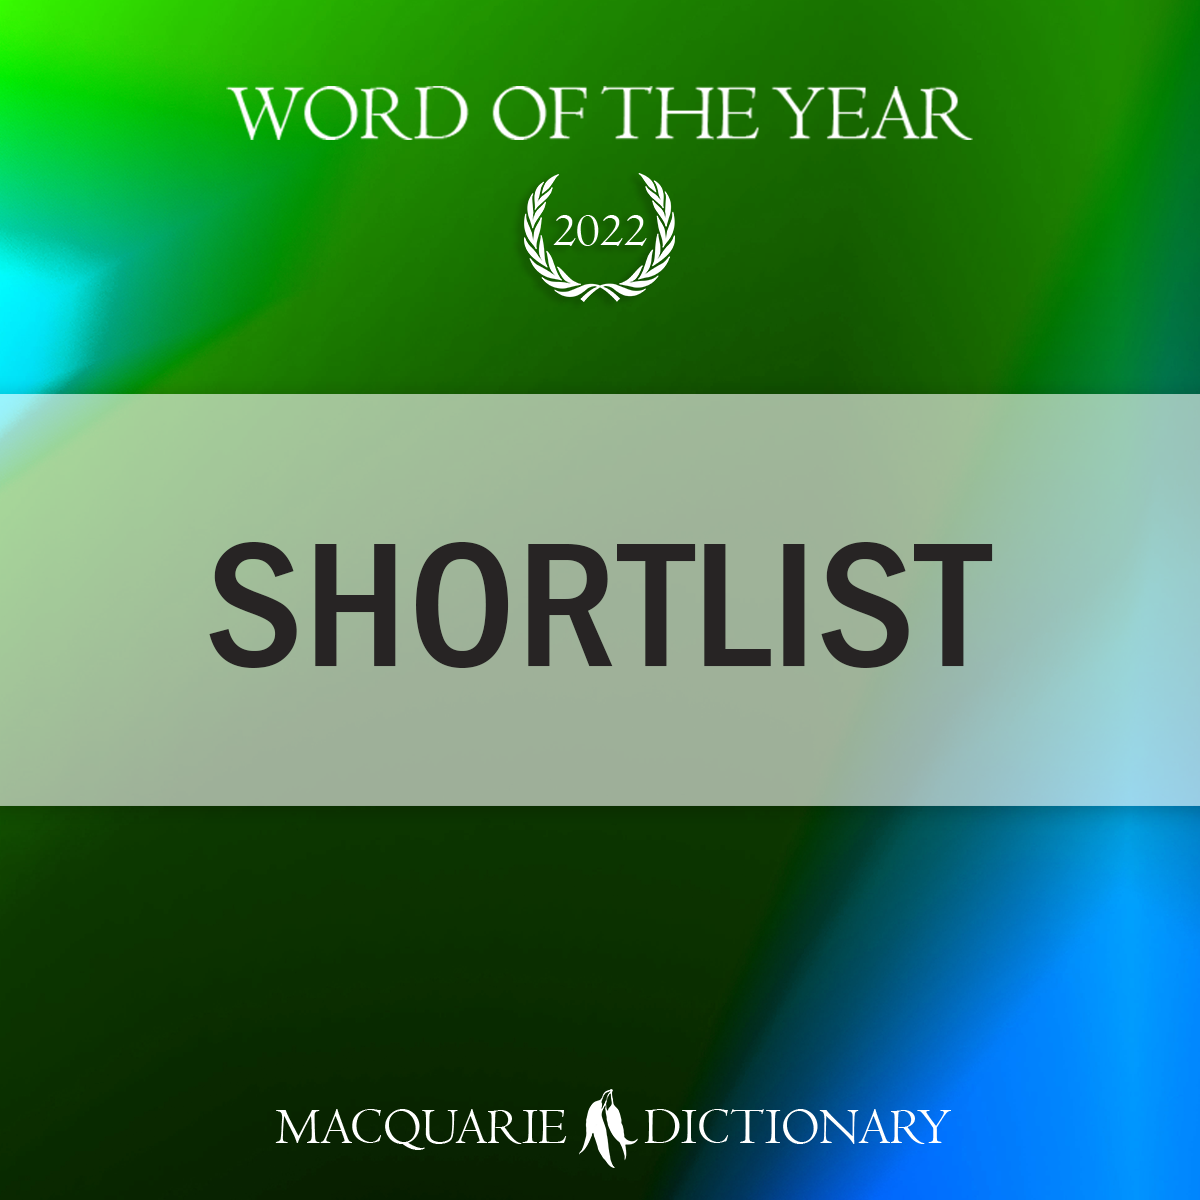 Macquarie Dictionary - This week's #AussieWord is underdaks